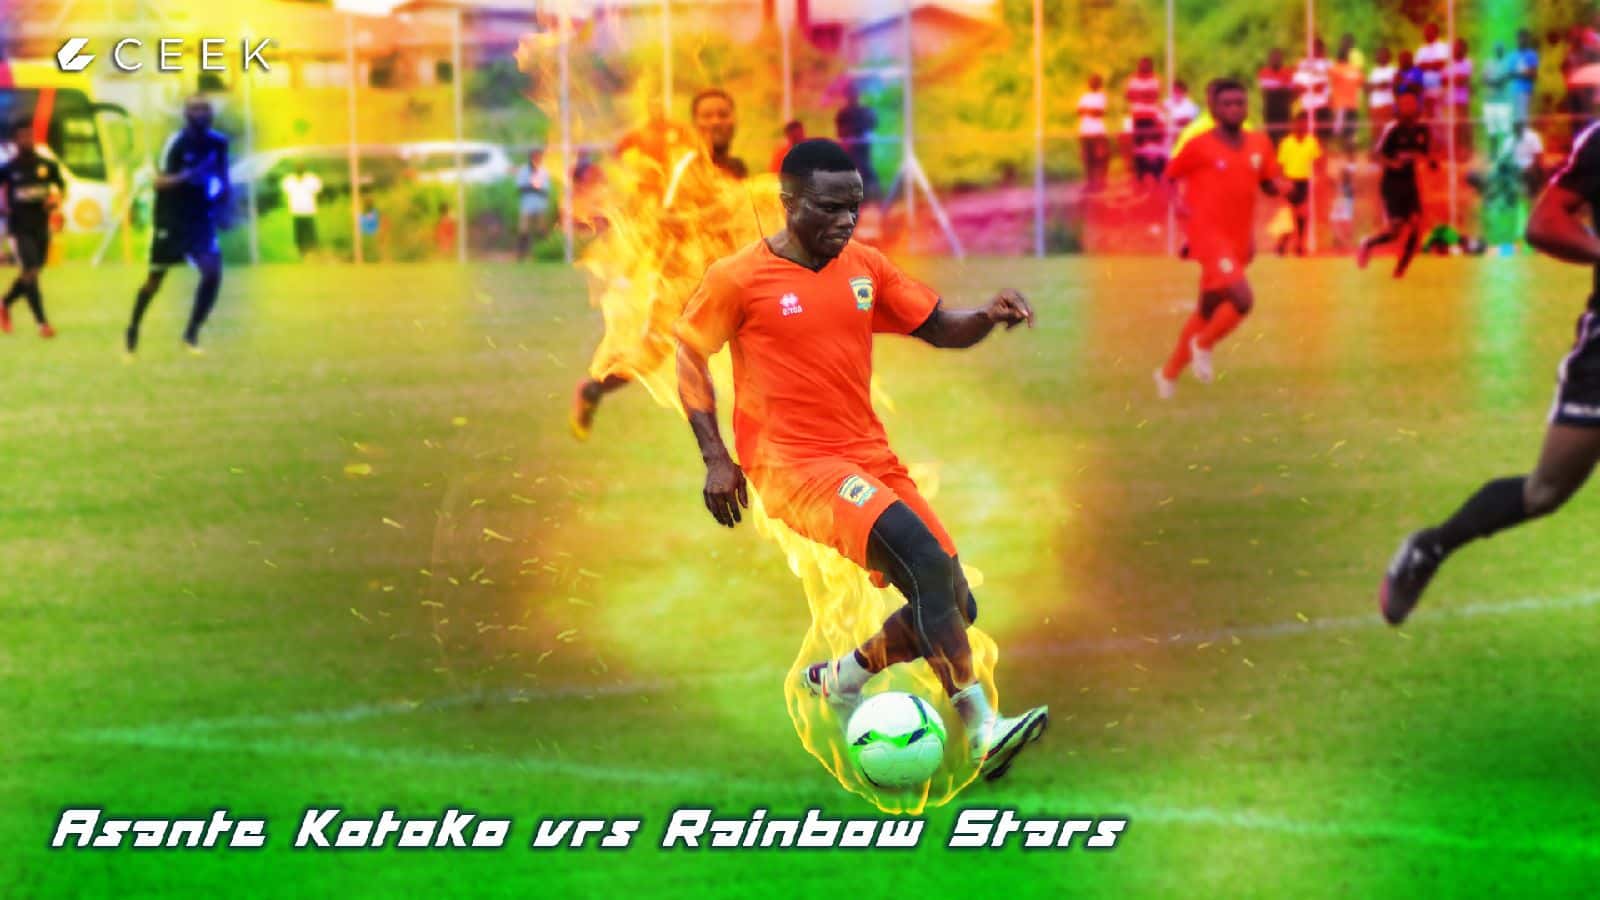 Asante Kotoko vrs Rainbow Stars